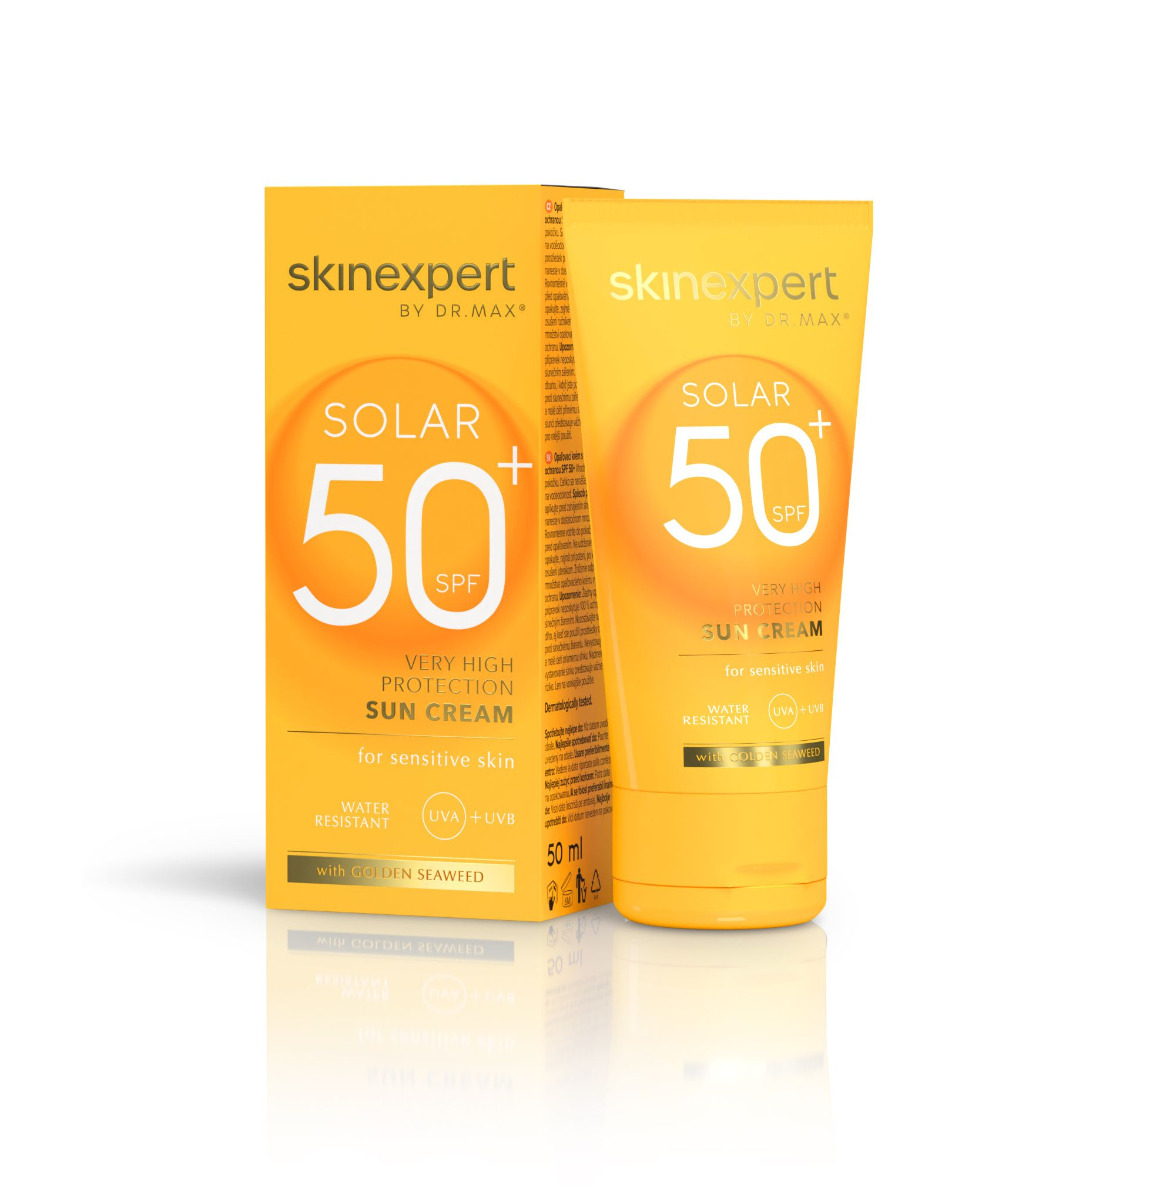 skinexpert BY DR.MAX SOLAR Sun Cream SPF50+ 50 ml skinexpert BY DR.MAX SOLAR